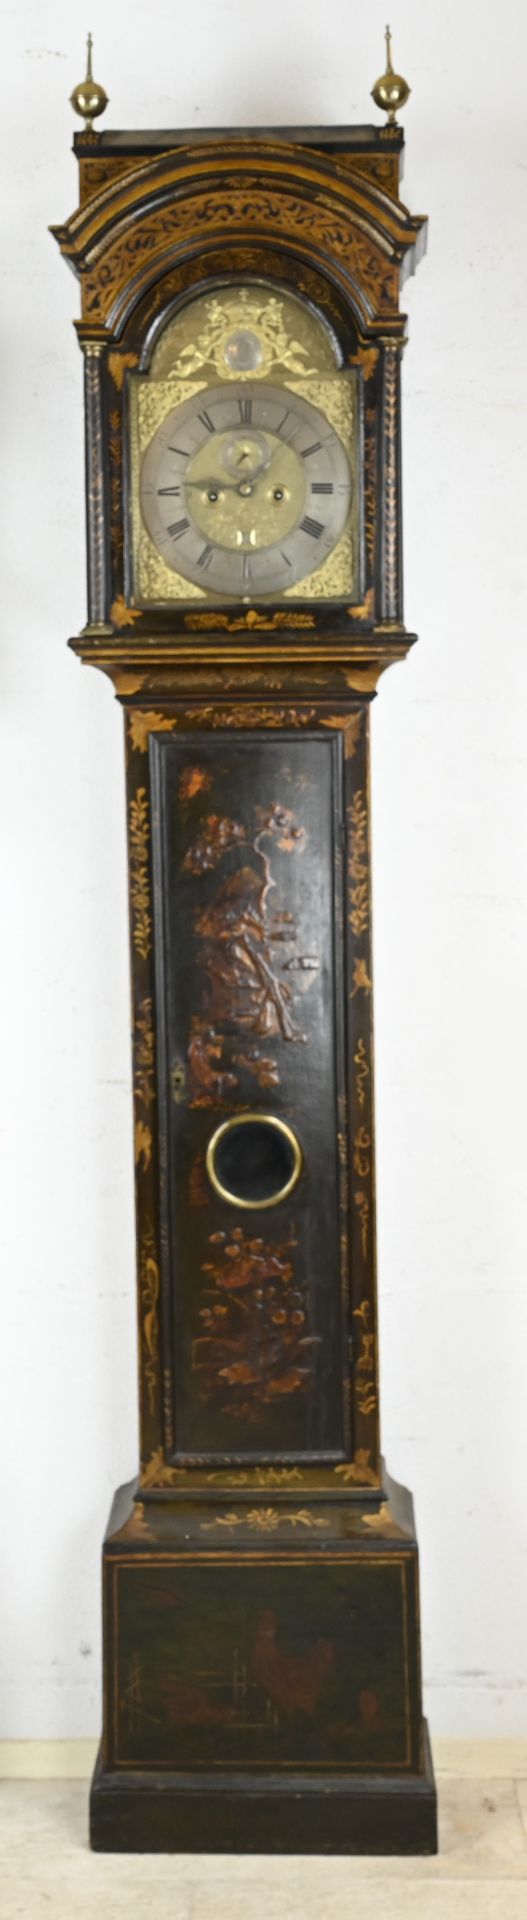 English grandfather clock, H 235 cm.